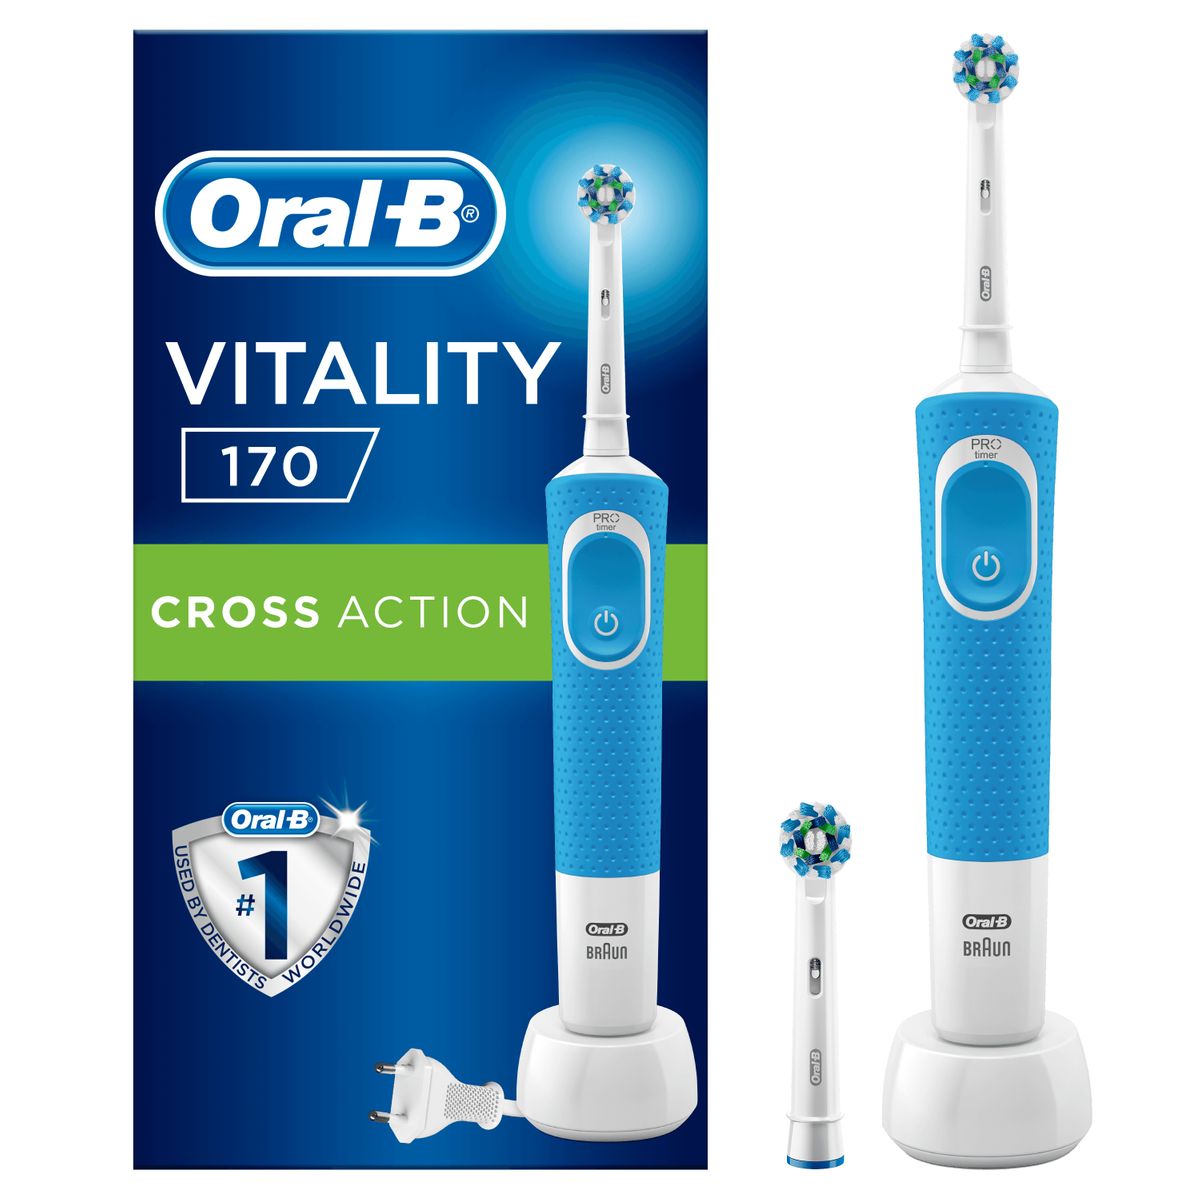 Oral-B Electric Toothbrush Braun Oral-B Vitality 170 CrossAction blue